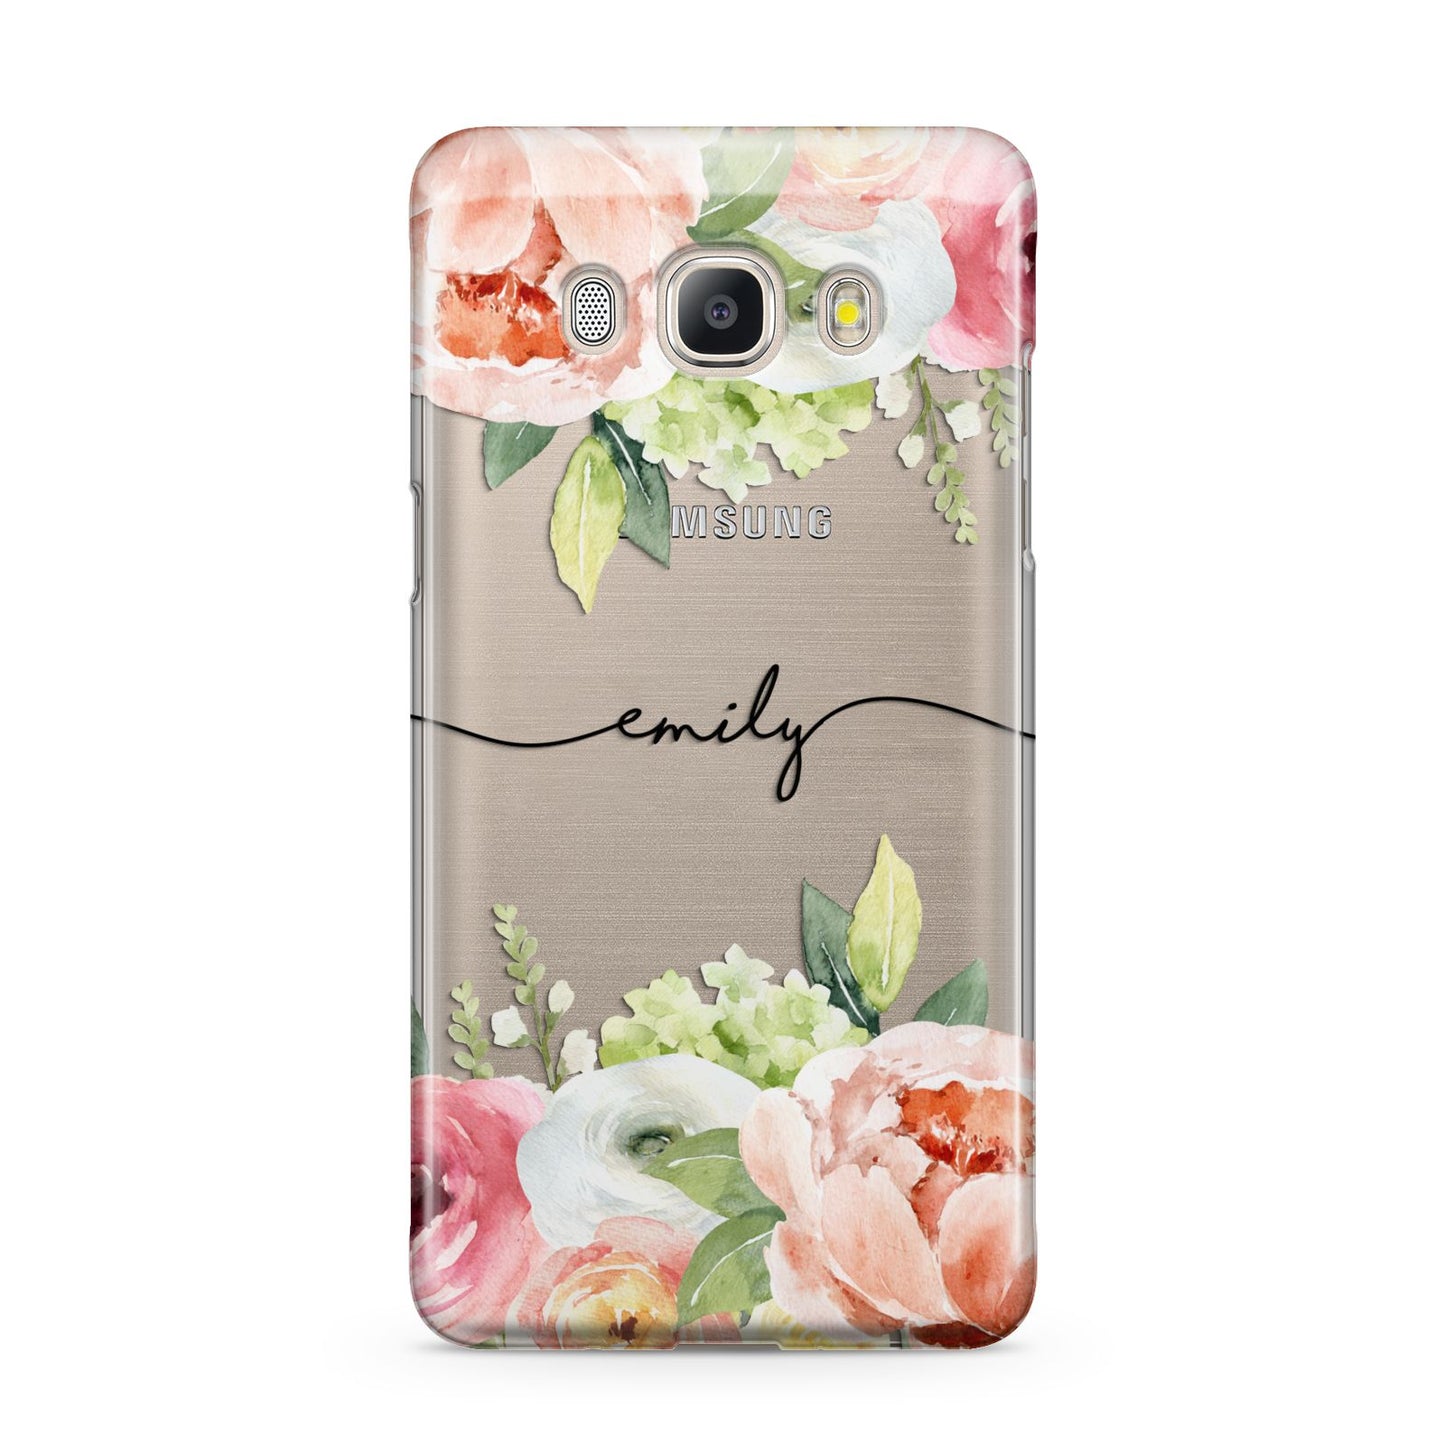 Personalised Flowers Samsung Galaxy J5 2016 Case